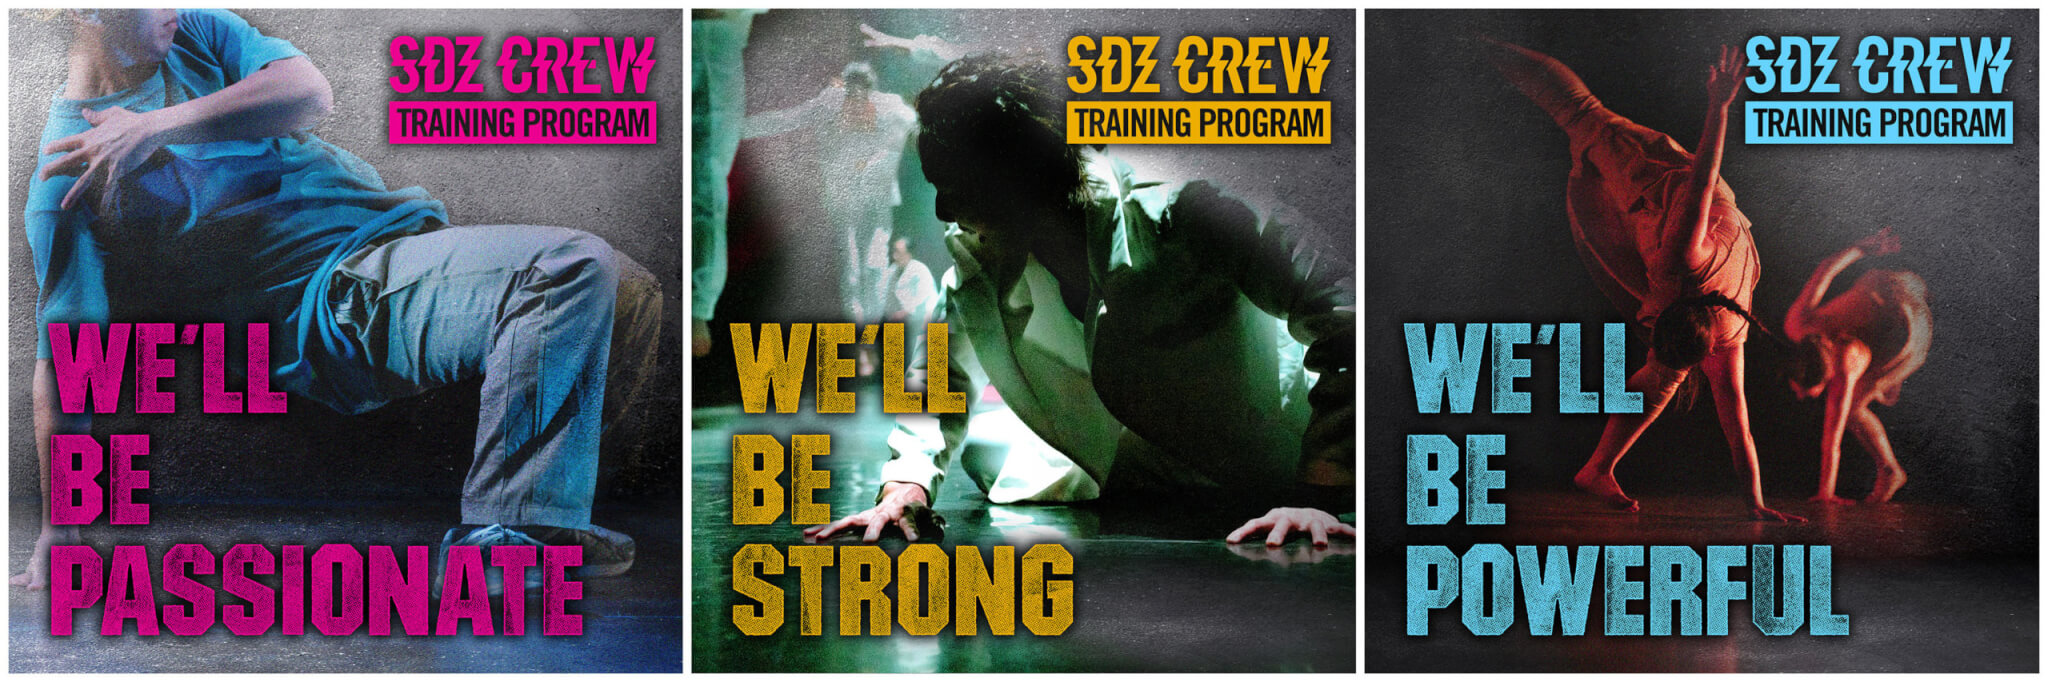 SDZ CREW Training Program